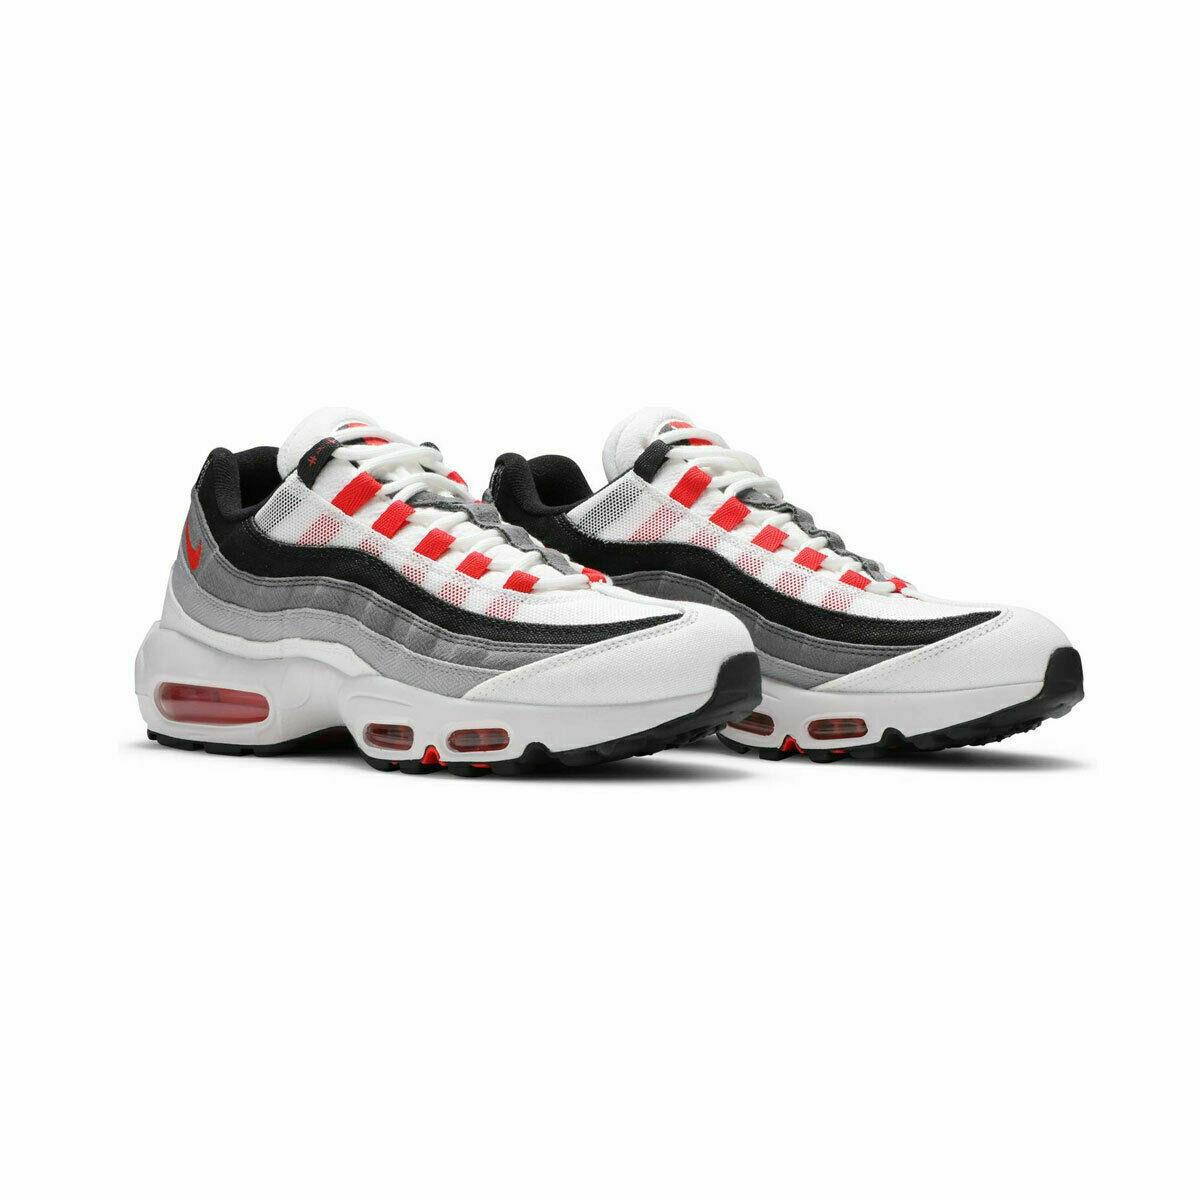 Nike shoes Air Max - Smoke Grey/Red/Black/White 0